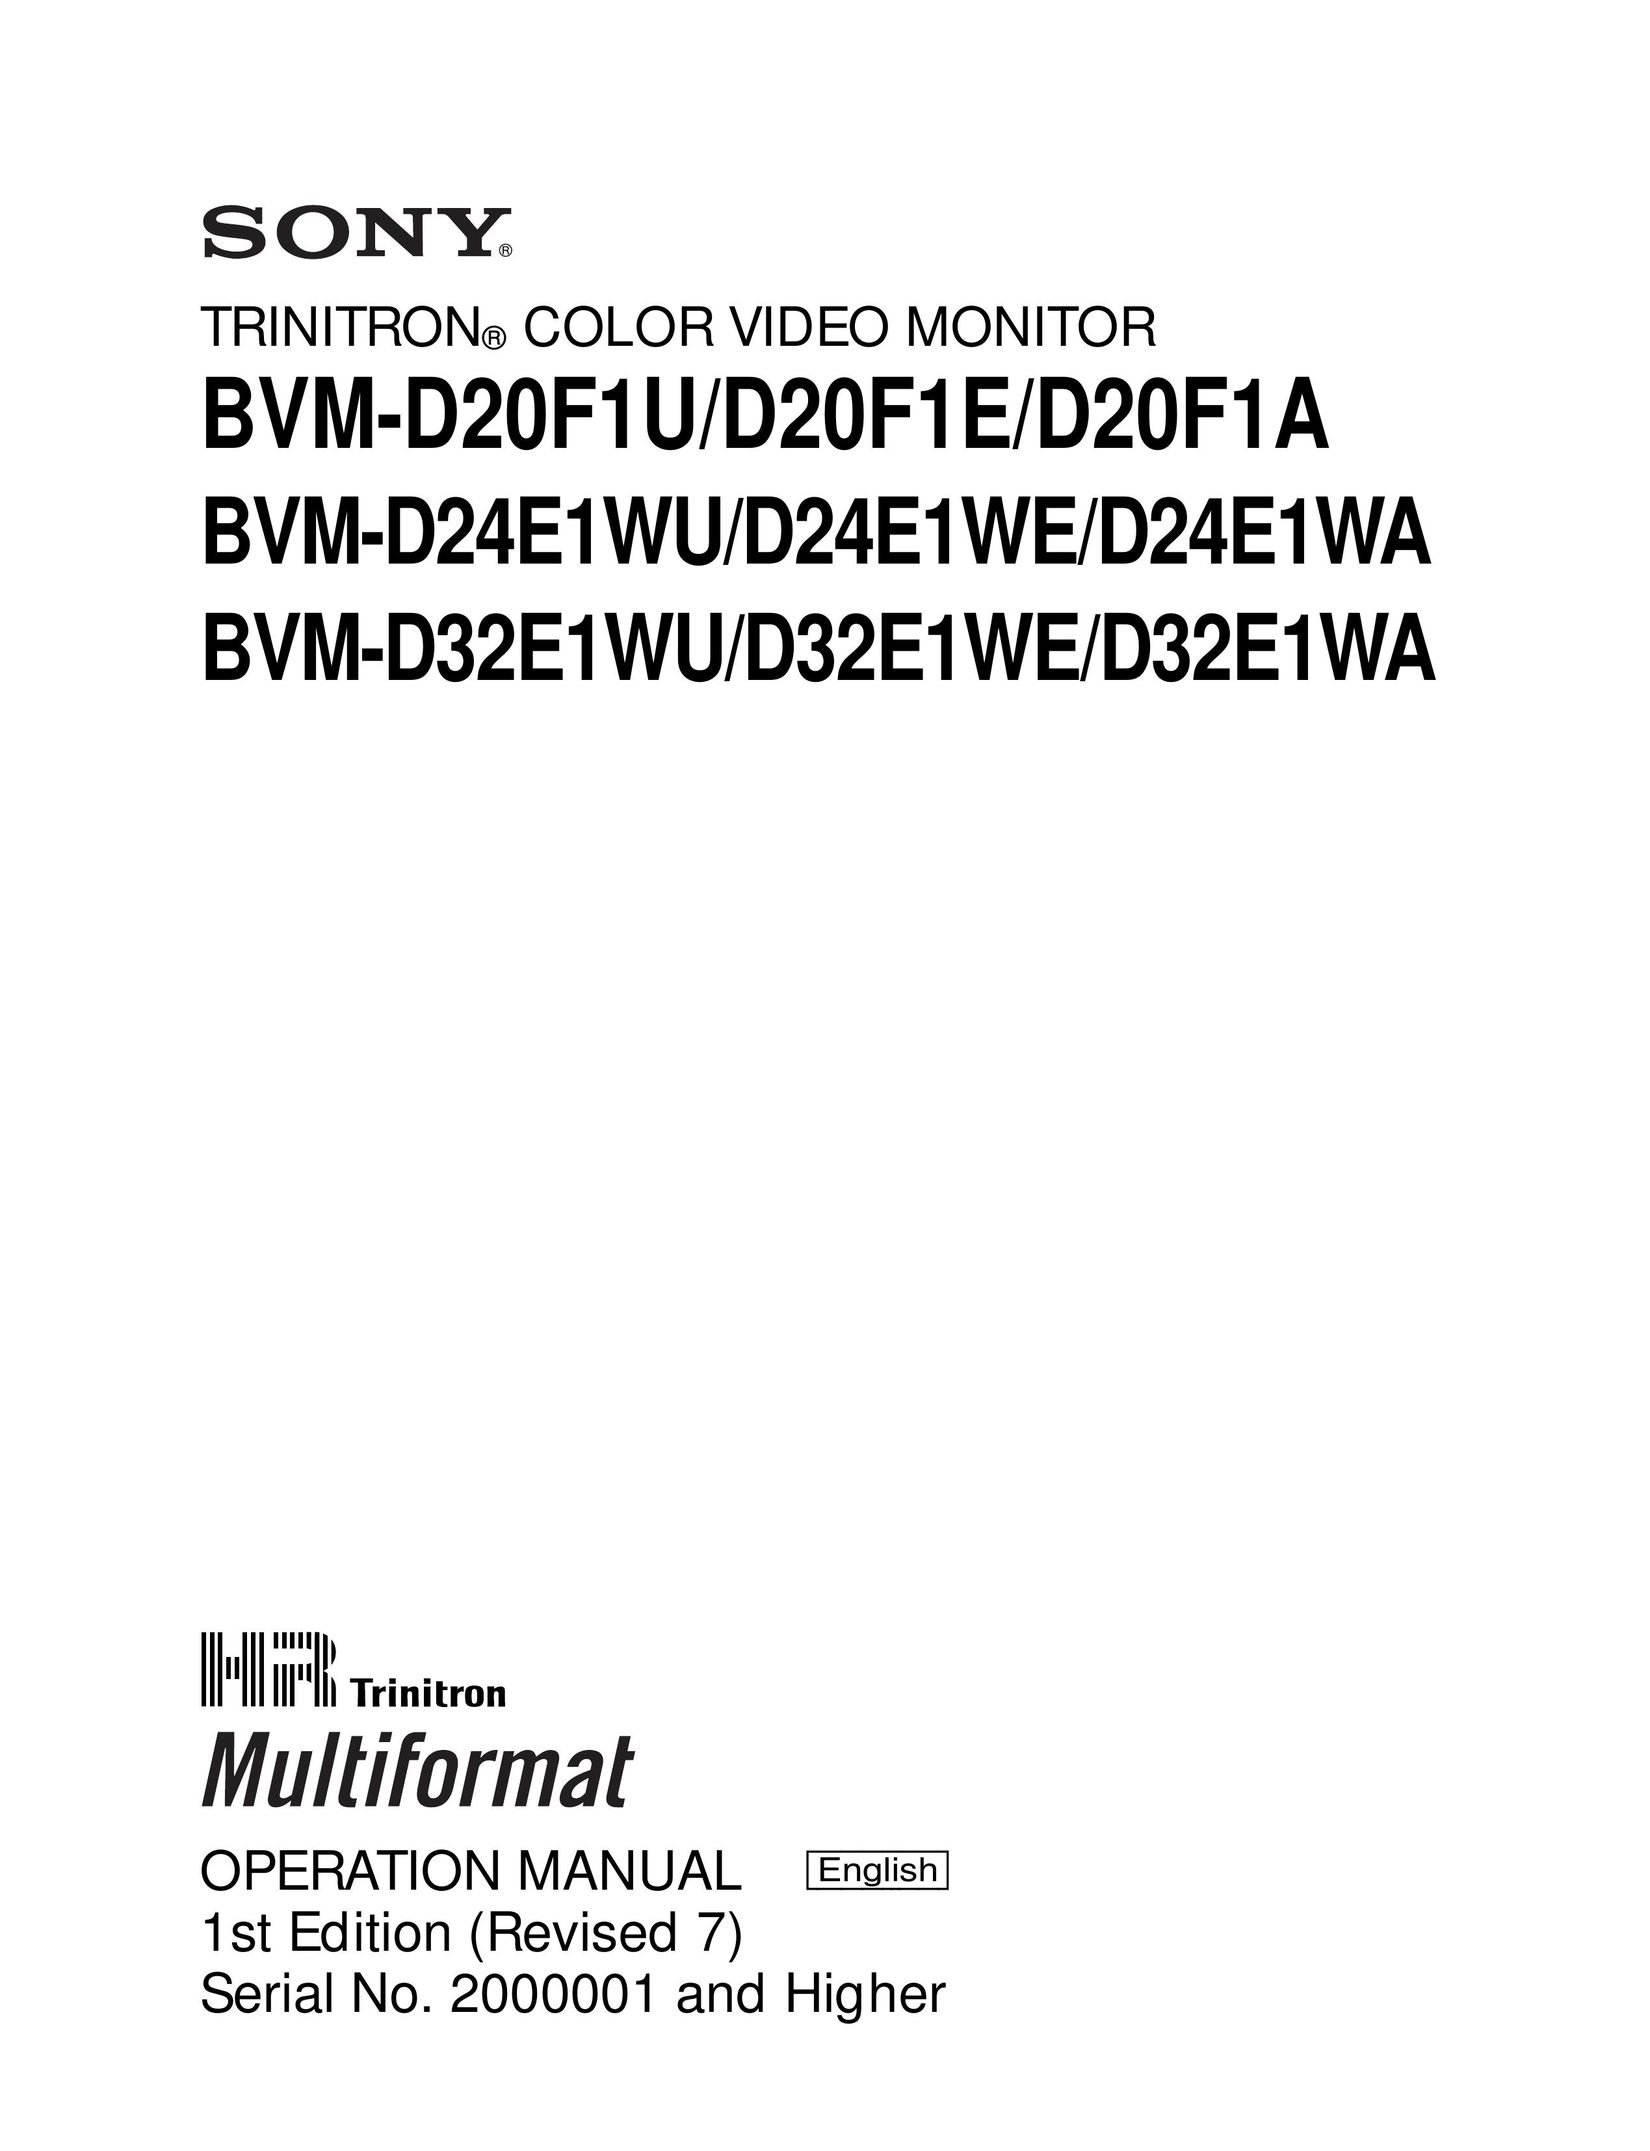 Sony BVM-D20F1U, BVM-D20F1E, BVM-D20F1A, BVM-D24E1WU, BVM-D24E1WE, BVM-D24E1WA, BVM-D32E1WU, BVM-D32E1WE, BVM-D32E1WA Computer Monitor User Manual